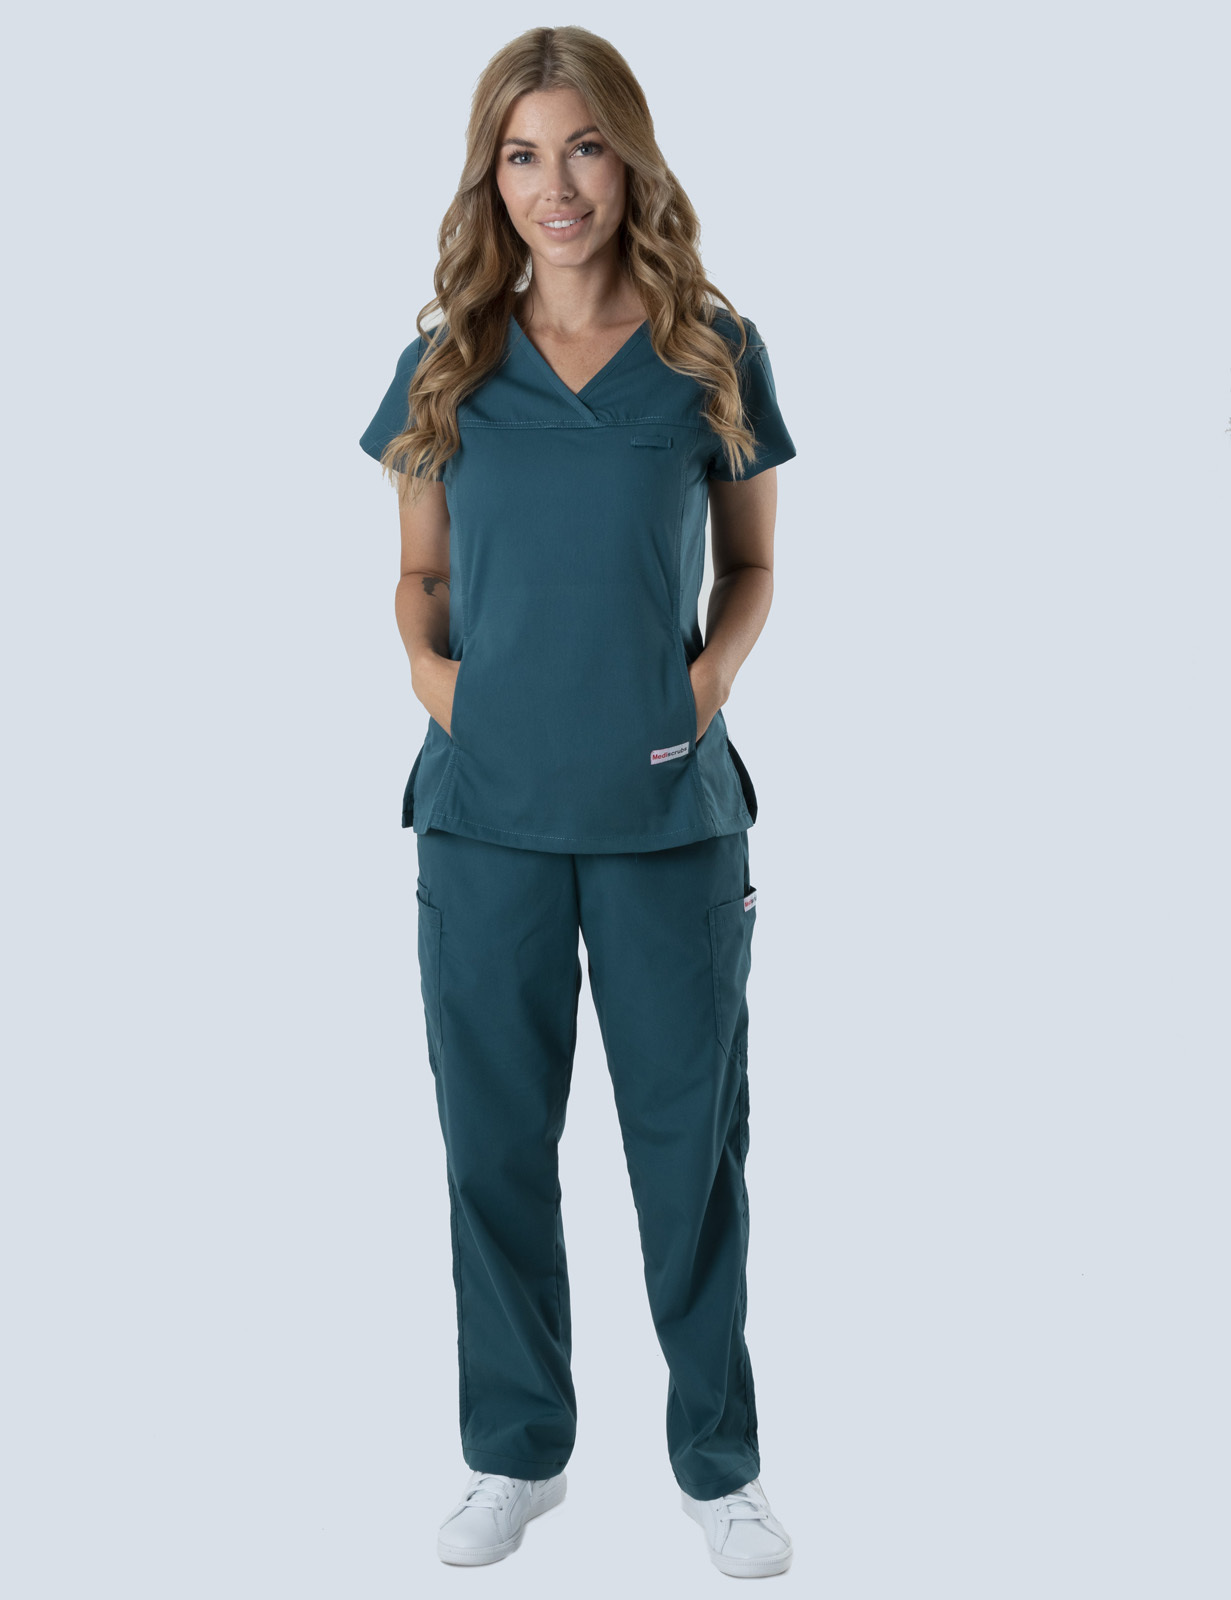 Moranbah Hospital - Nursing (Women's Fit Solid Scrub Top and Cargo Pants in Caribbean incl Logos)